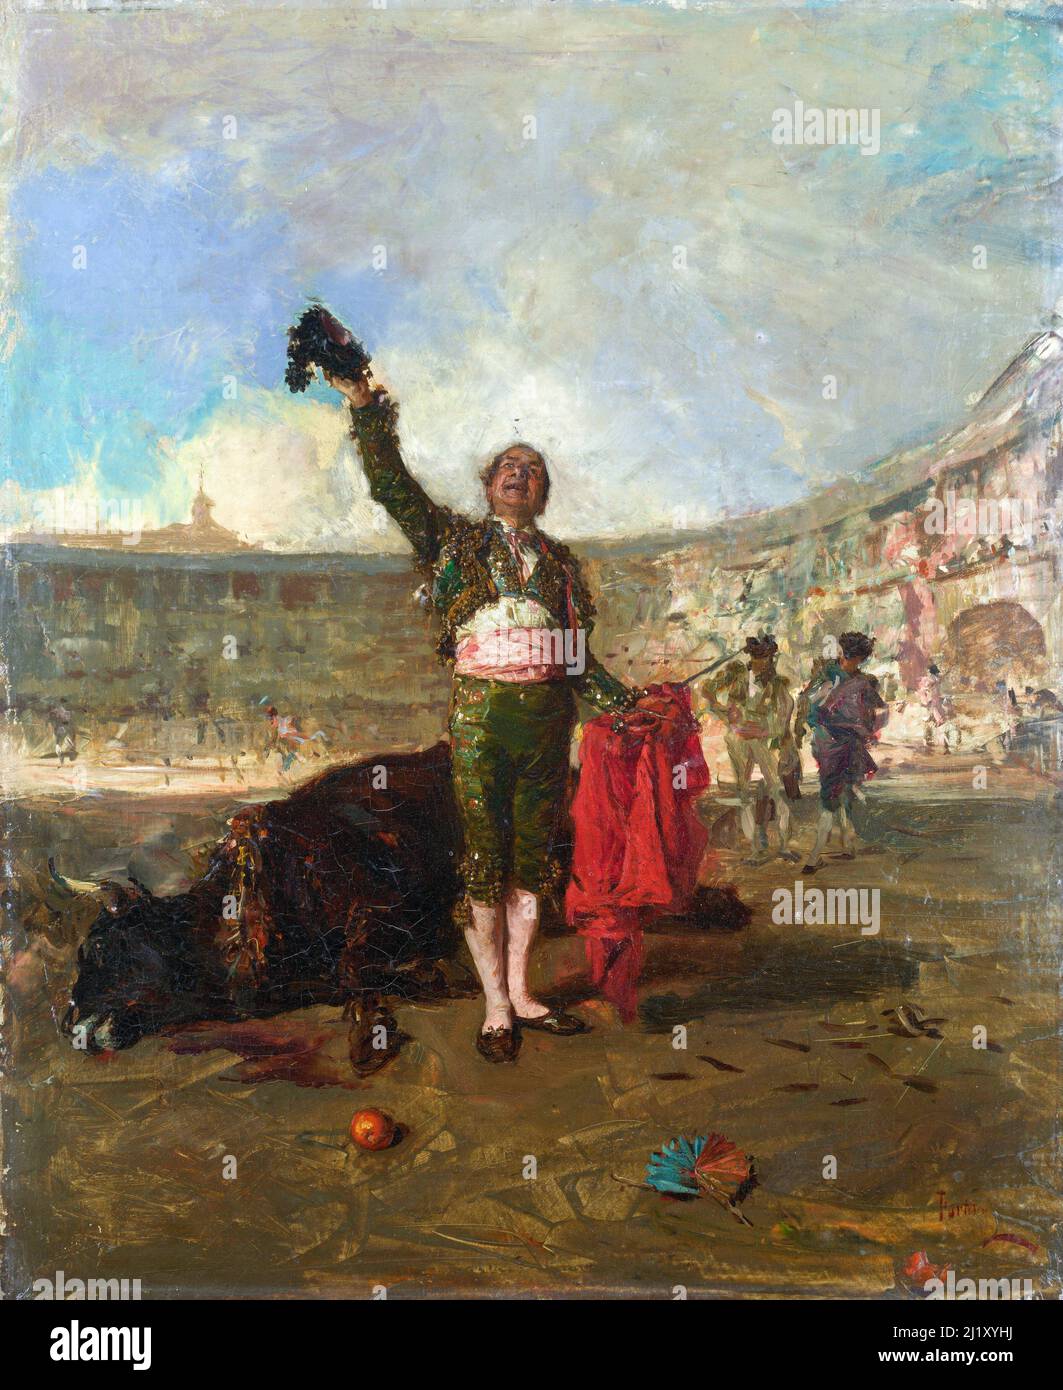 Le Salute du Bullfighter par Mariano Fortuny y Madrazo (1871-1949), huile sur toile, c. 1869 Banque D'Images